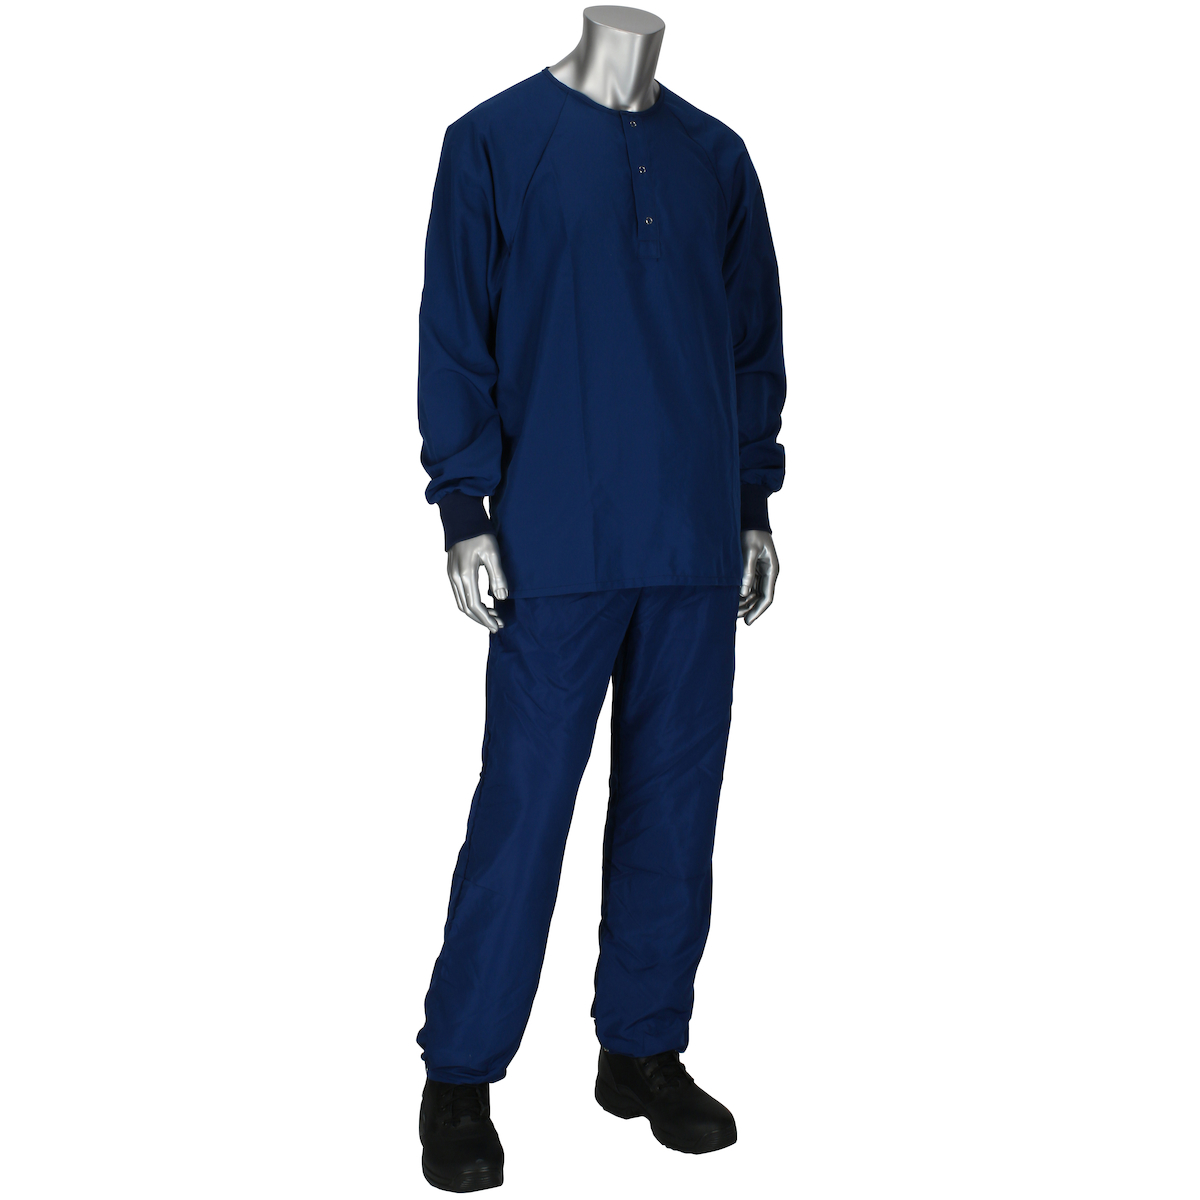 HSCBM1P/HSCTM3-49NV PIP®Uniform Technology™Microdenier工作服上衣和下装(海军蓝)